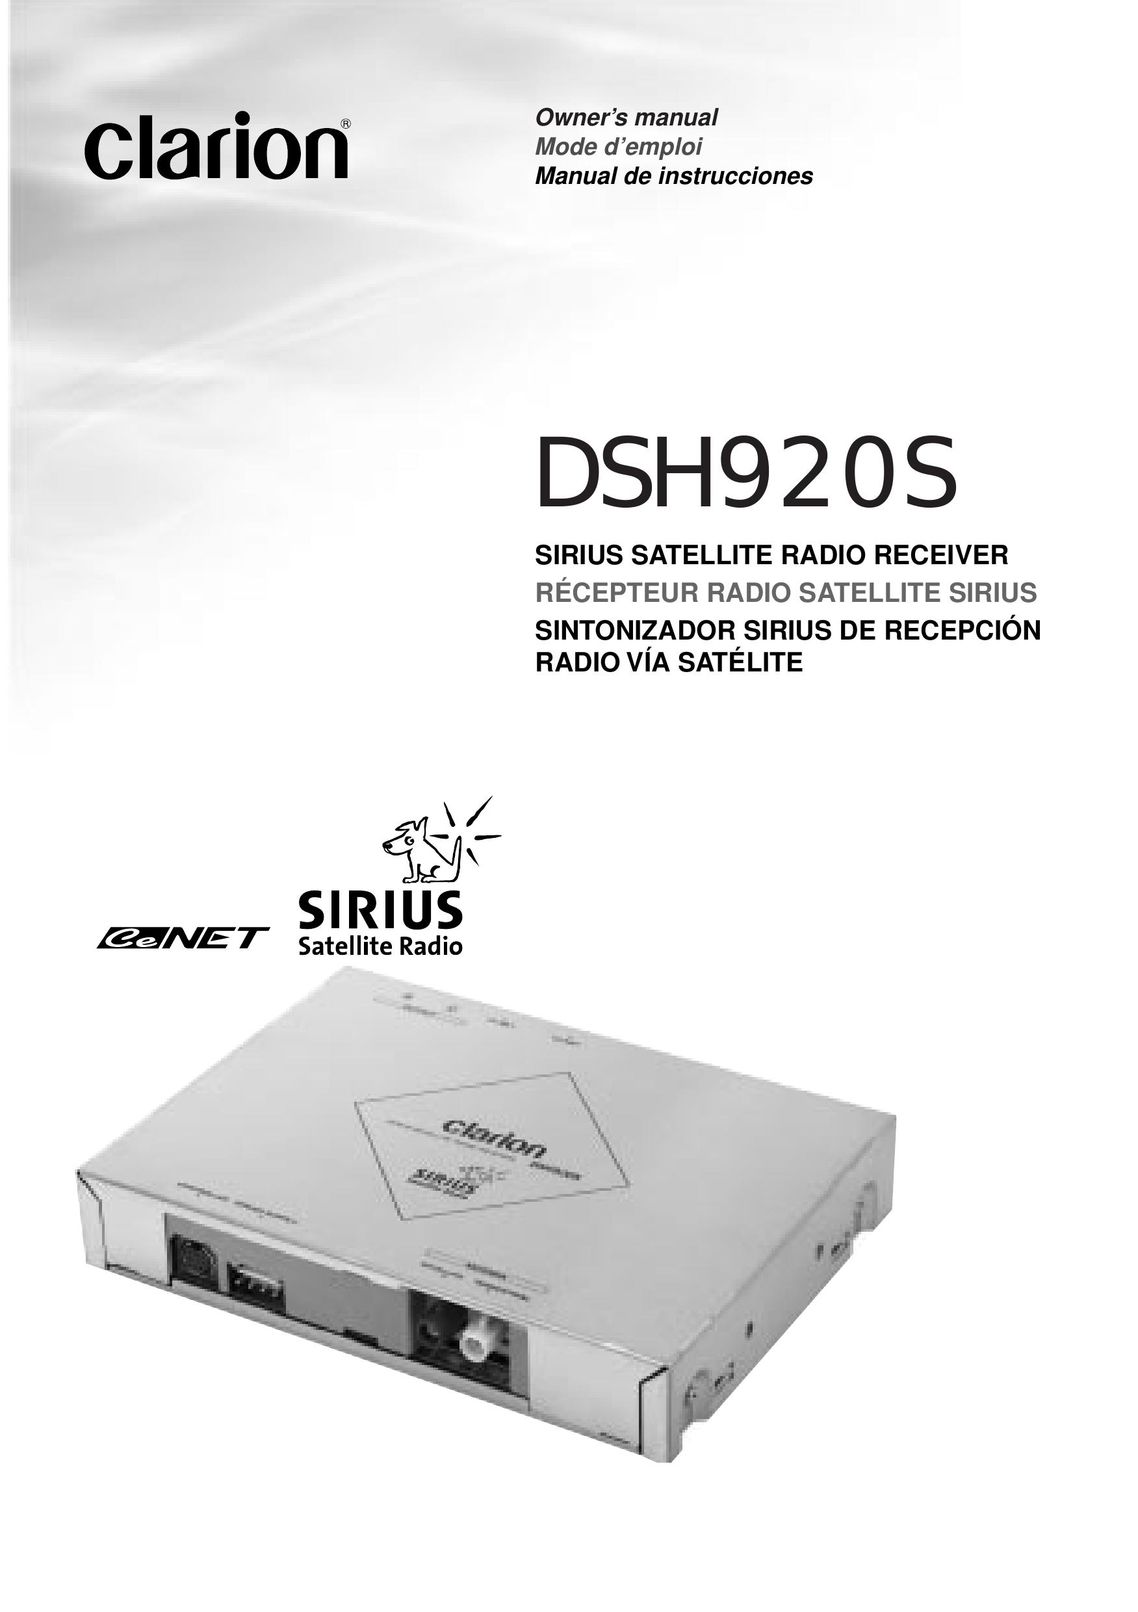 Clarion DSH920S Satellite Radio User Manual